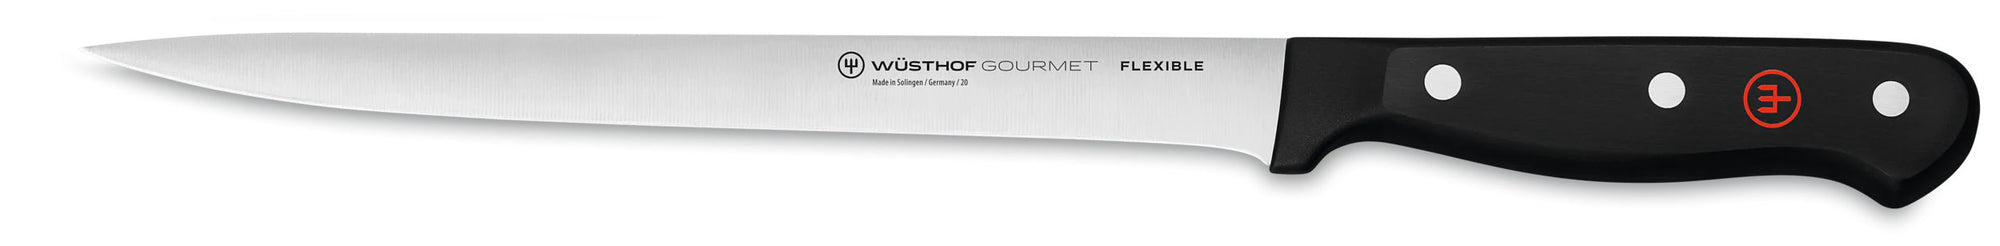 Wusthof Gourmet Fish Fillet Knife, 8" (20cm), Flexible - 4618-20